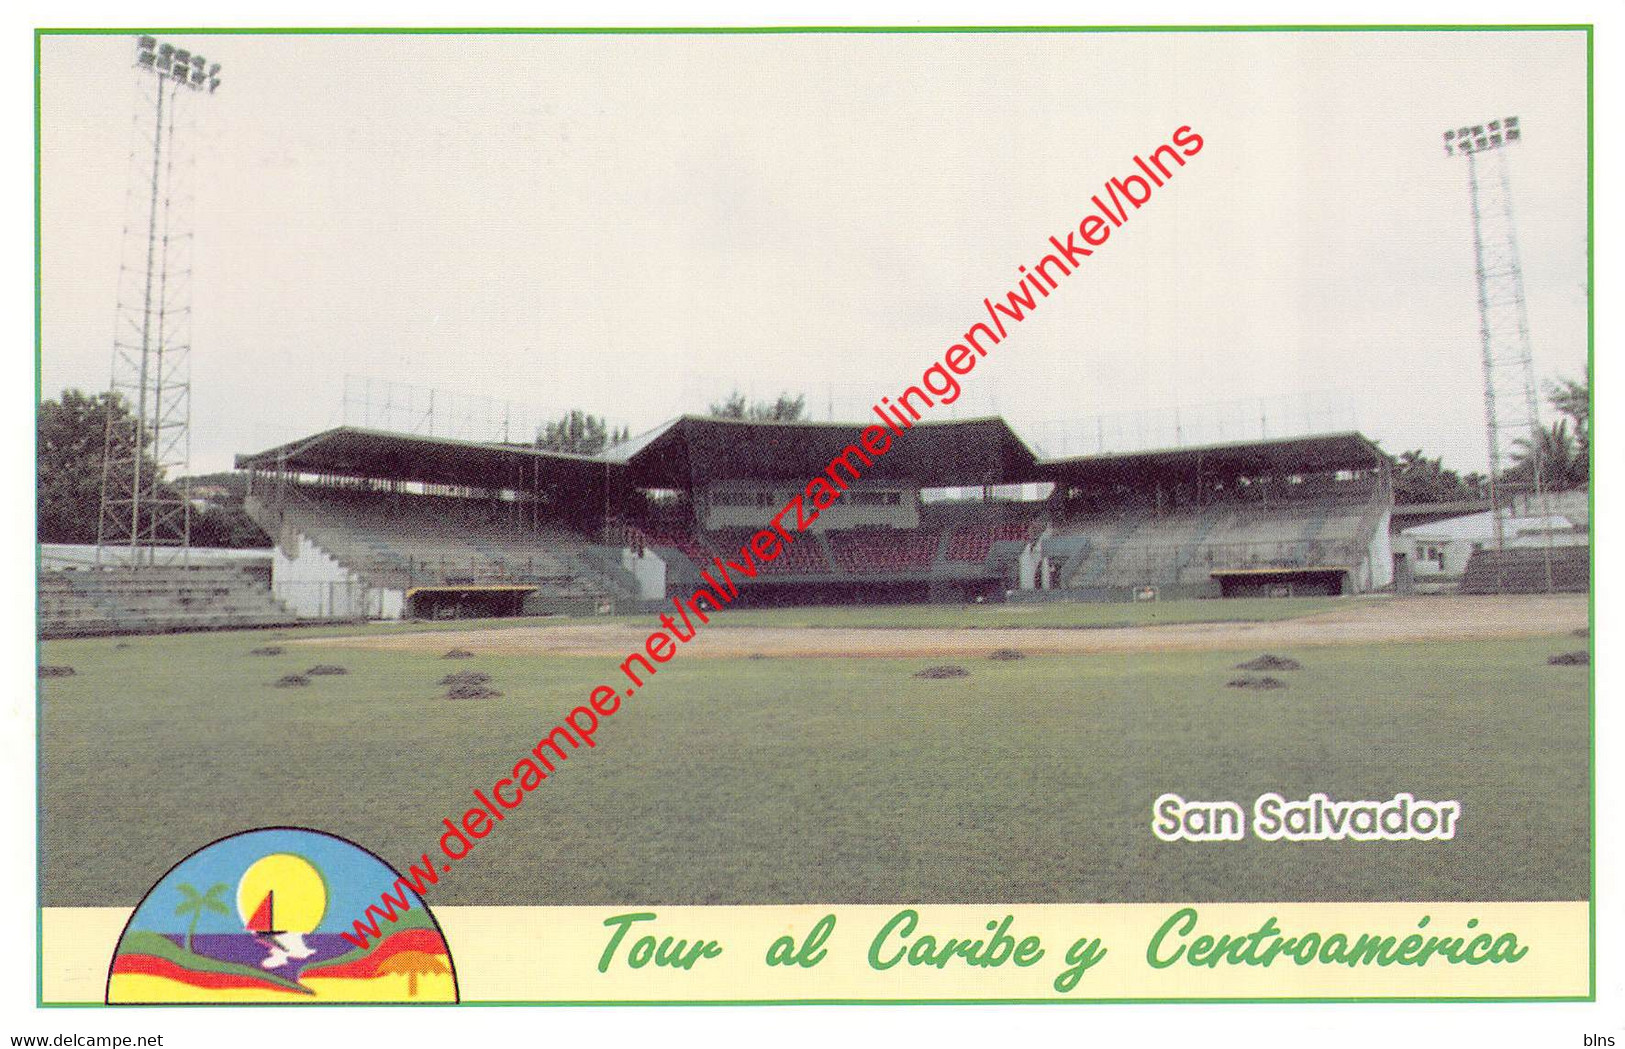 San Salvador - Estadio Saturnino Bengoa - El Salvador - Baseball - El Salvador